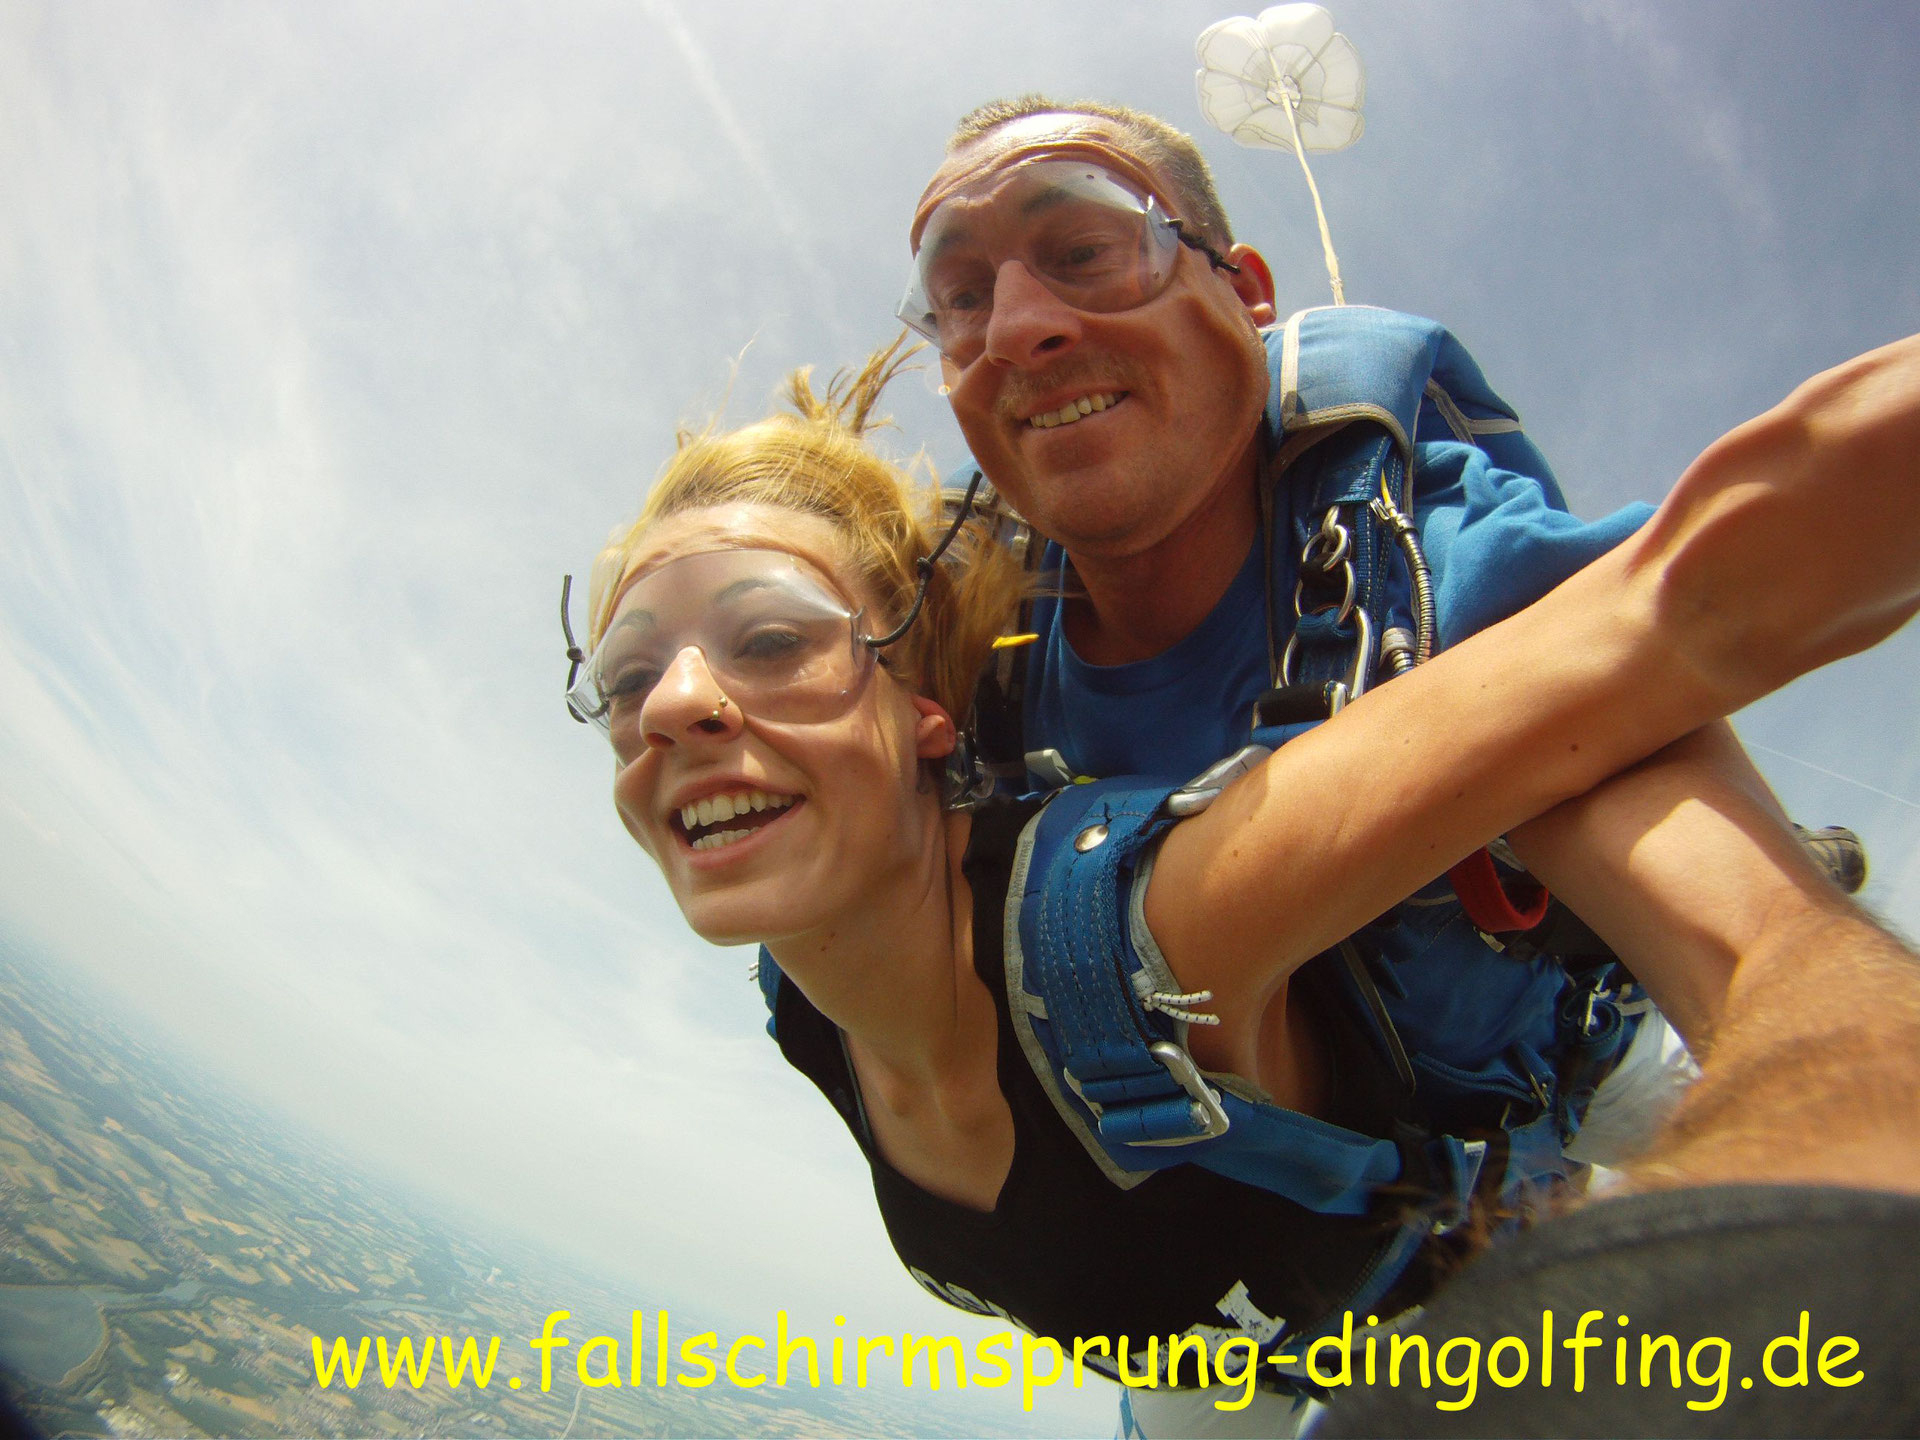 Tandemsprung München - Fallschirmspringen Dingolfing mit Fallschirm Tandemsprung München